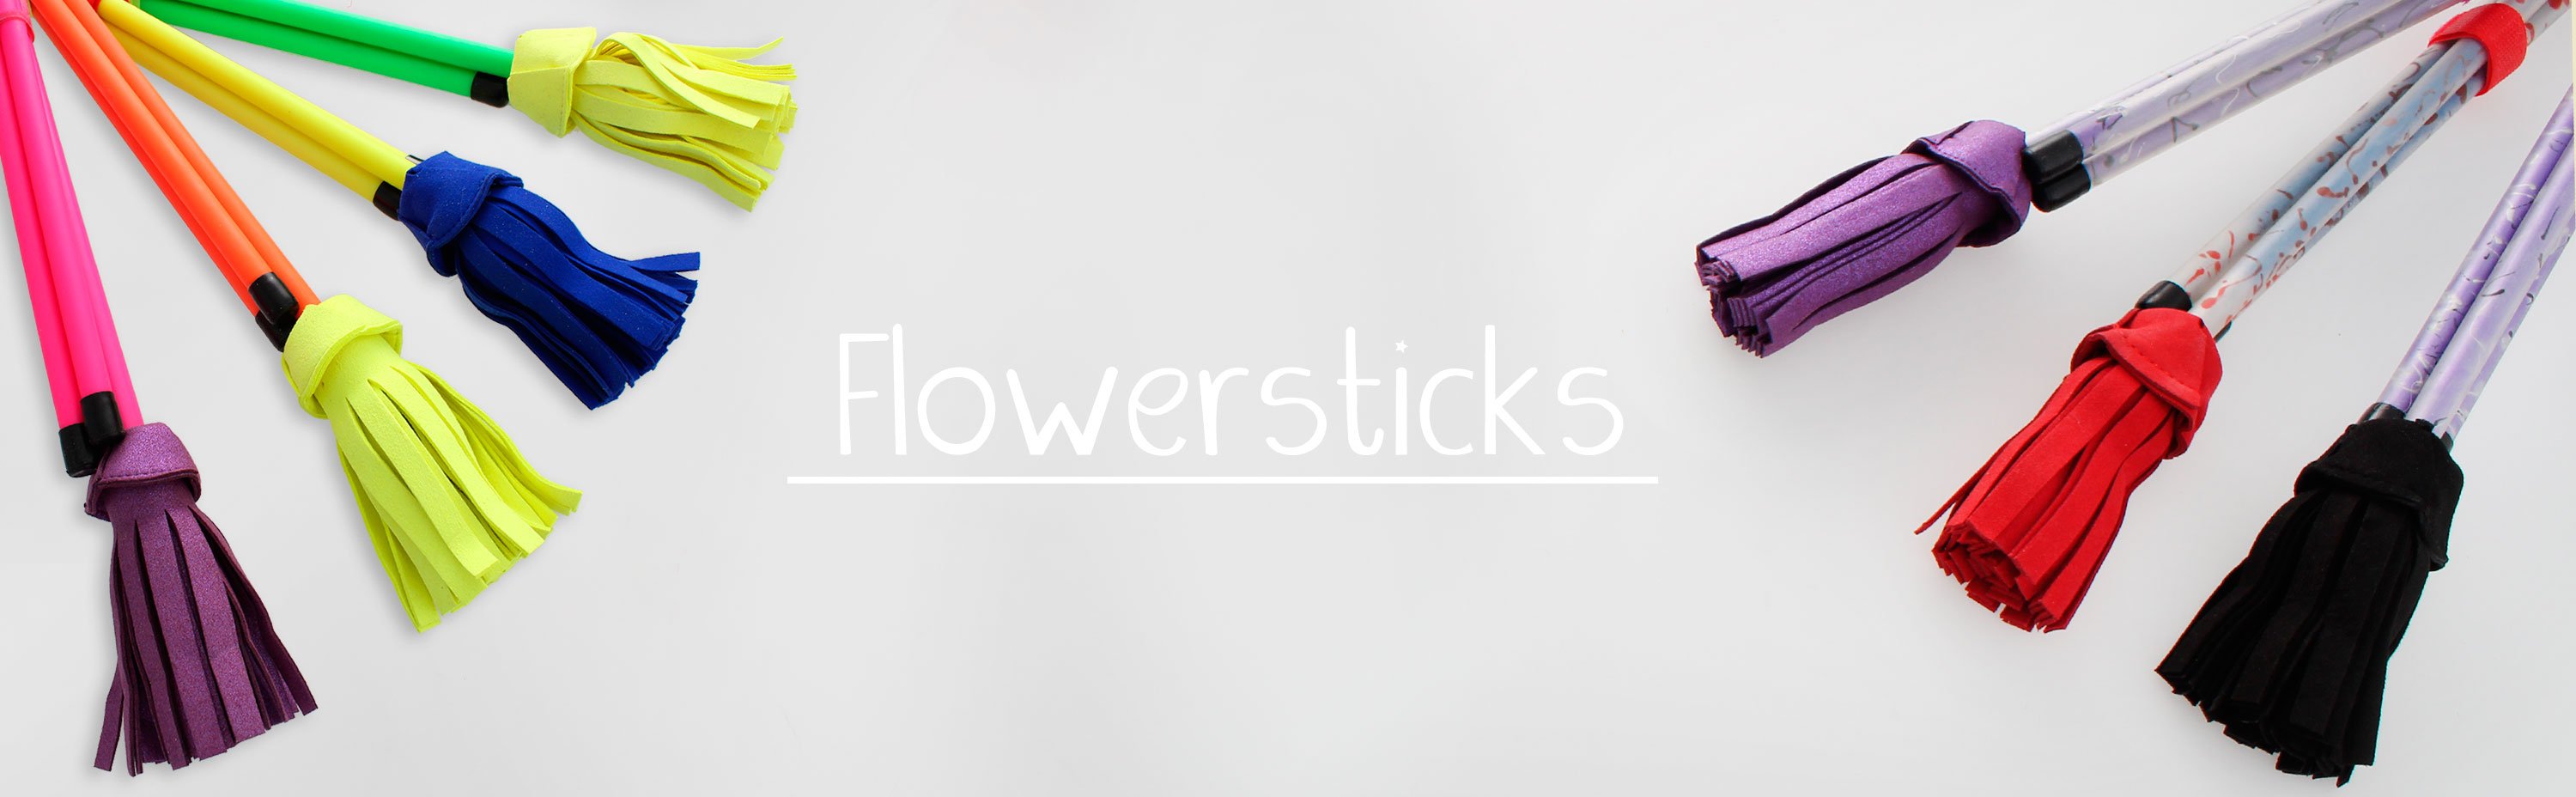 Flowersticks